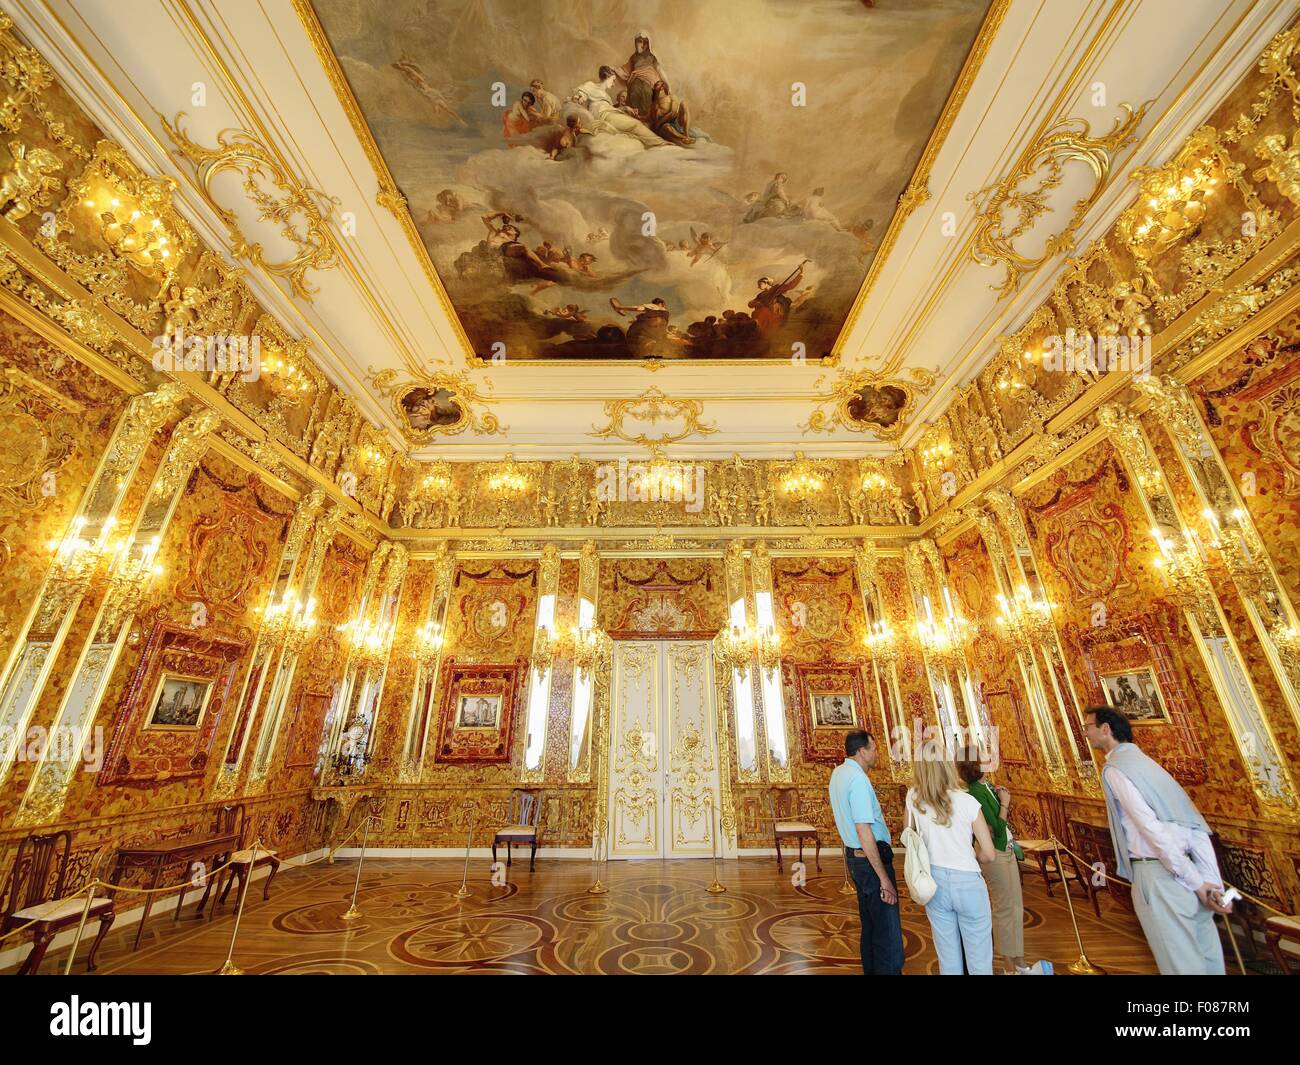 Paintings in illuminated Amber Room at Tsarskoye Selo, St. Petersburg, Russia Stock Photo